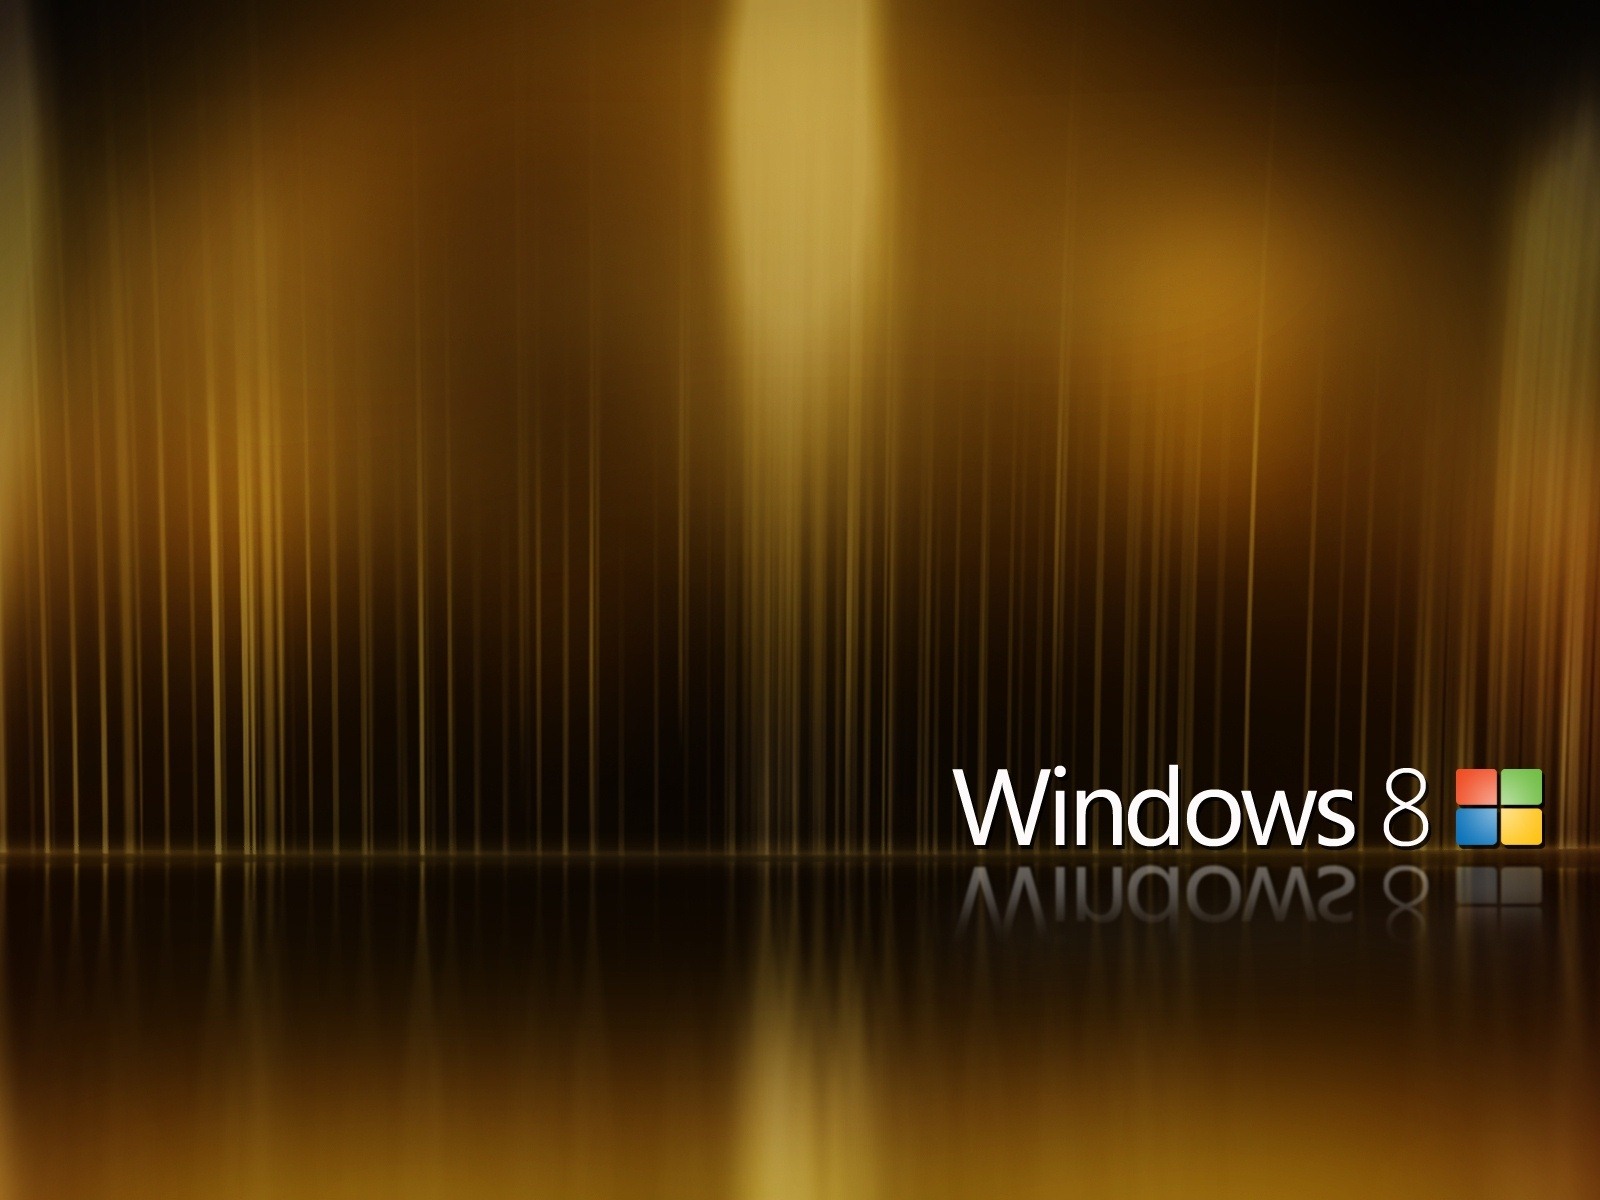 Windows 8 主题壁纸 (二)8 - 1600x1200